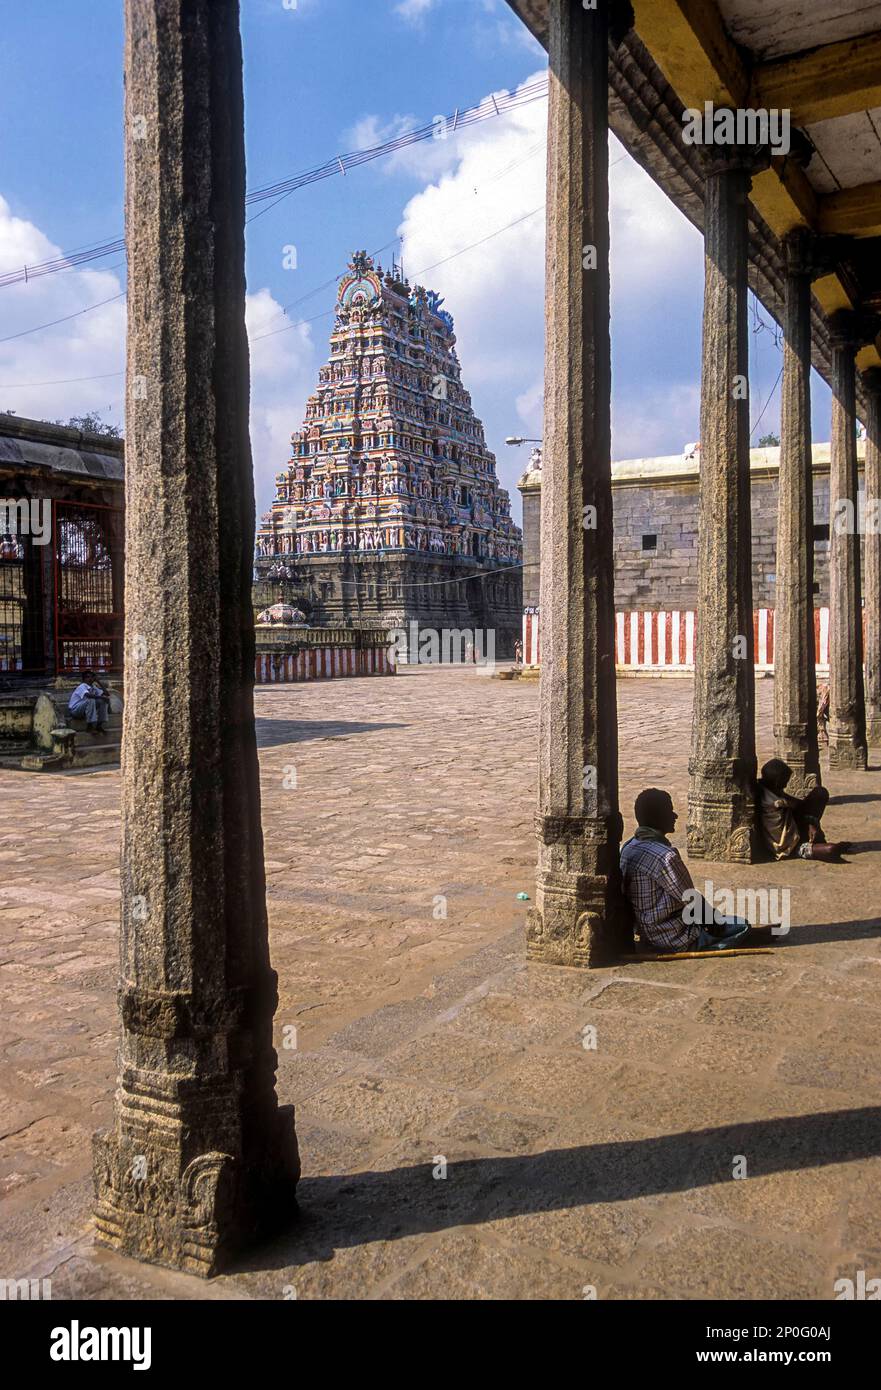 The Virudhagireeswar Vriddhagiriswarar Temple in Virudhachalam Vriddhachalam, Tamil Nadu, South India, India, Asia Stock Photo